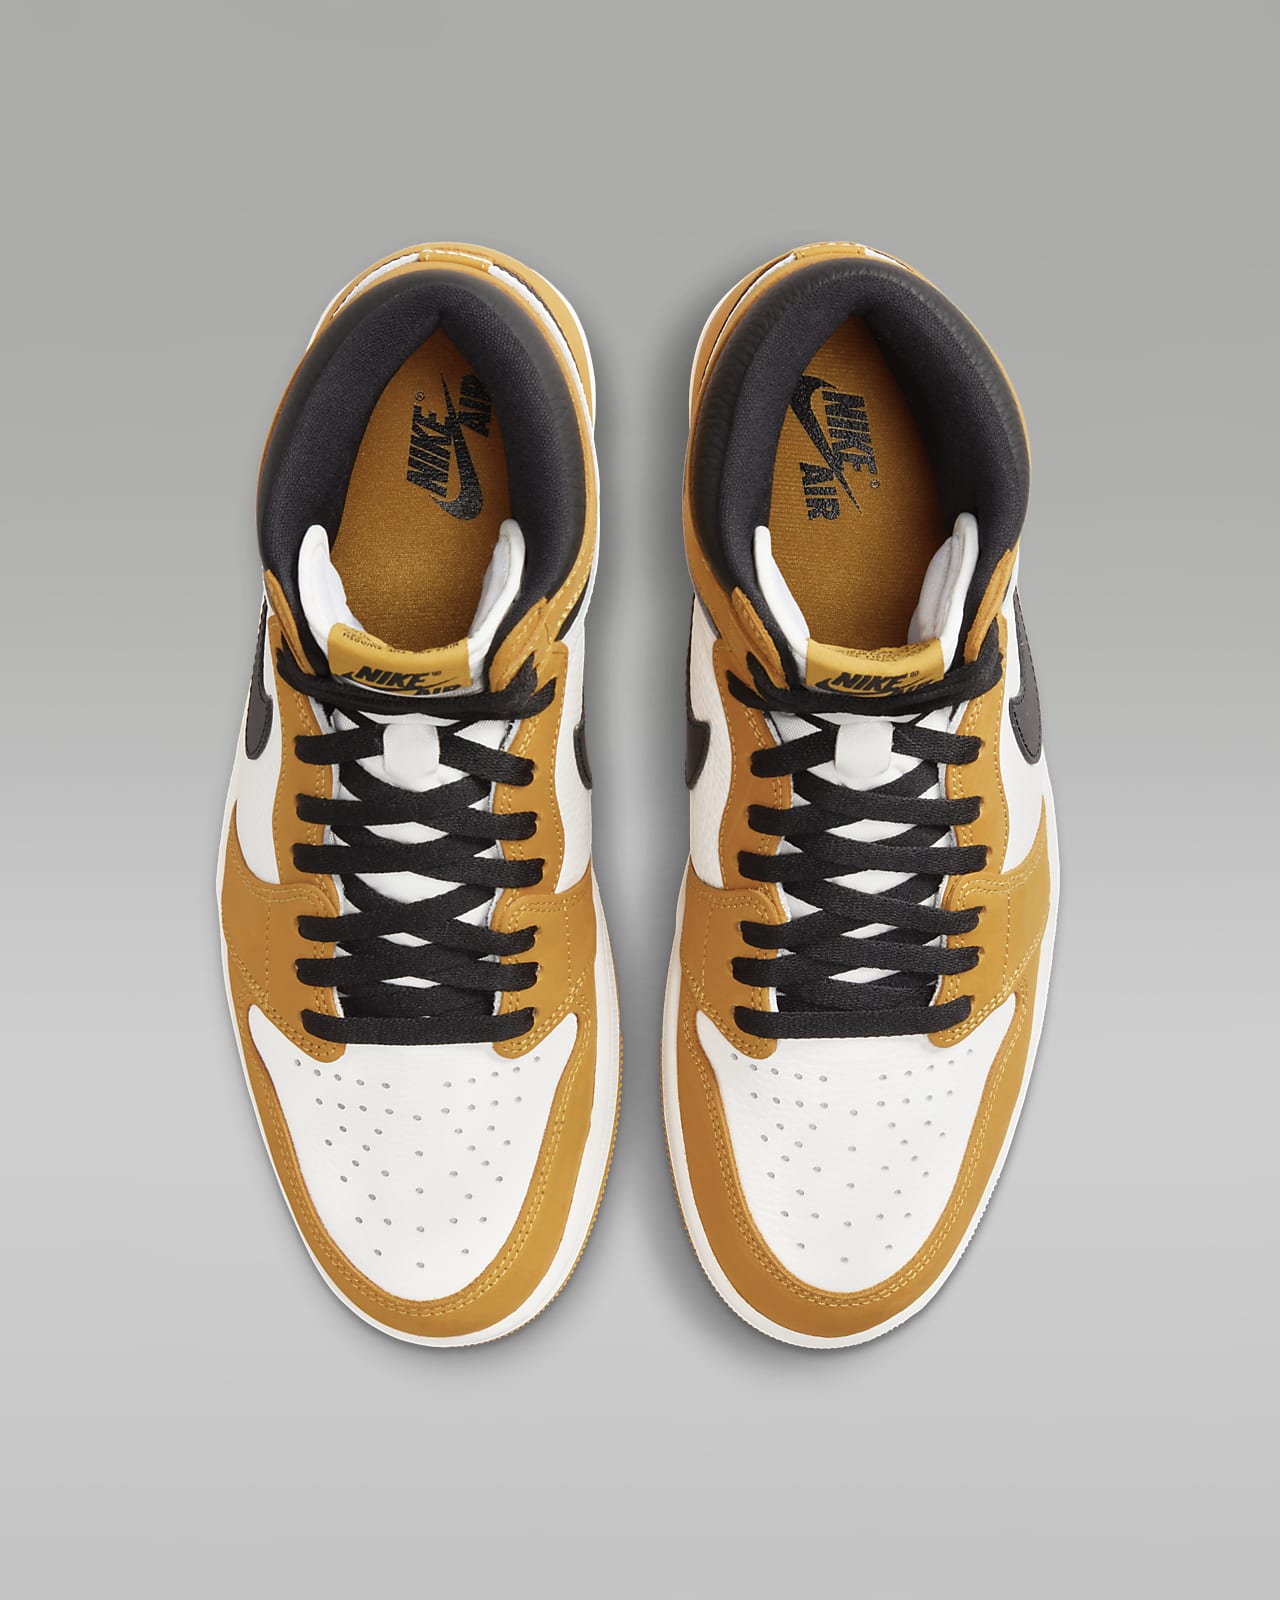 Zapatos Jordan Tiendas - Air Jordan 1 Sb Qs High Tops Hombre Blancas